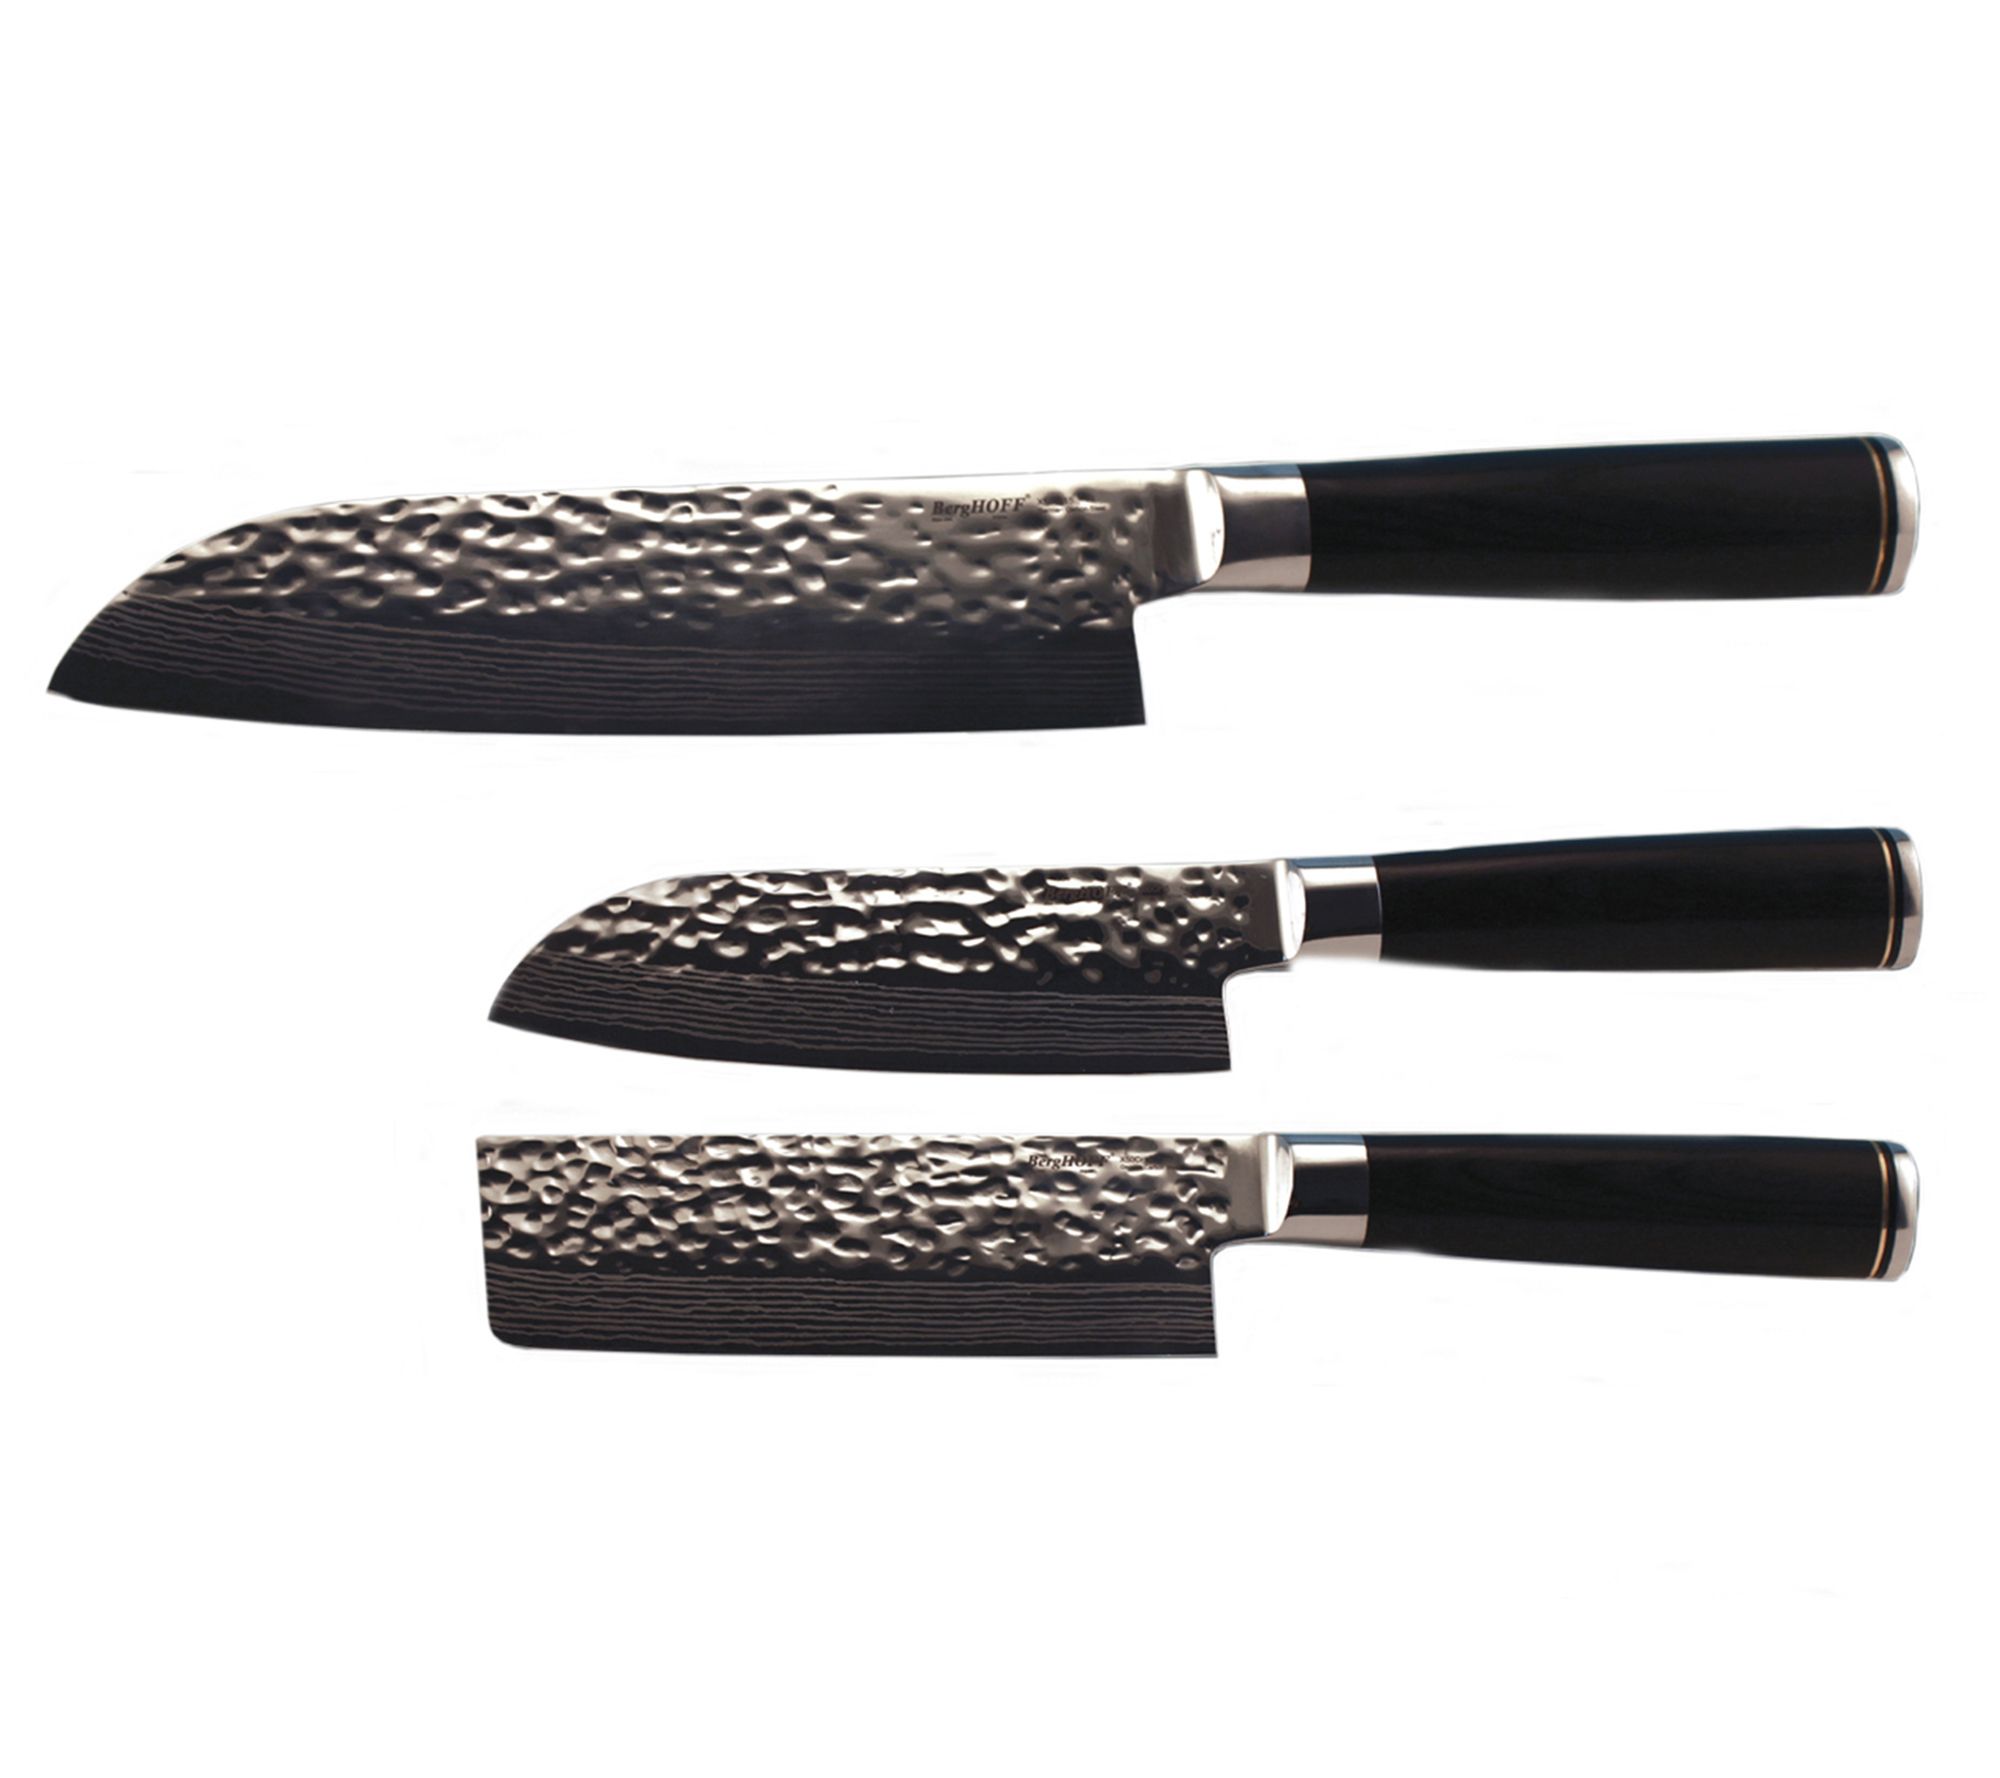 Tovla Jr. Kitchen Knife And Foldable Cutting Board Set Green : Target